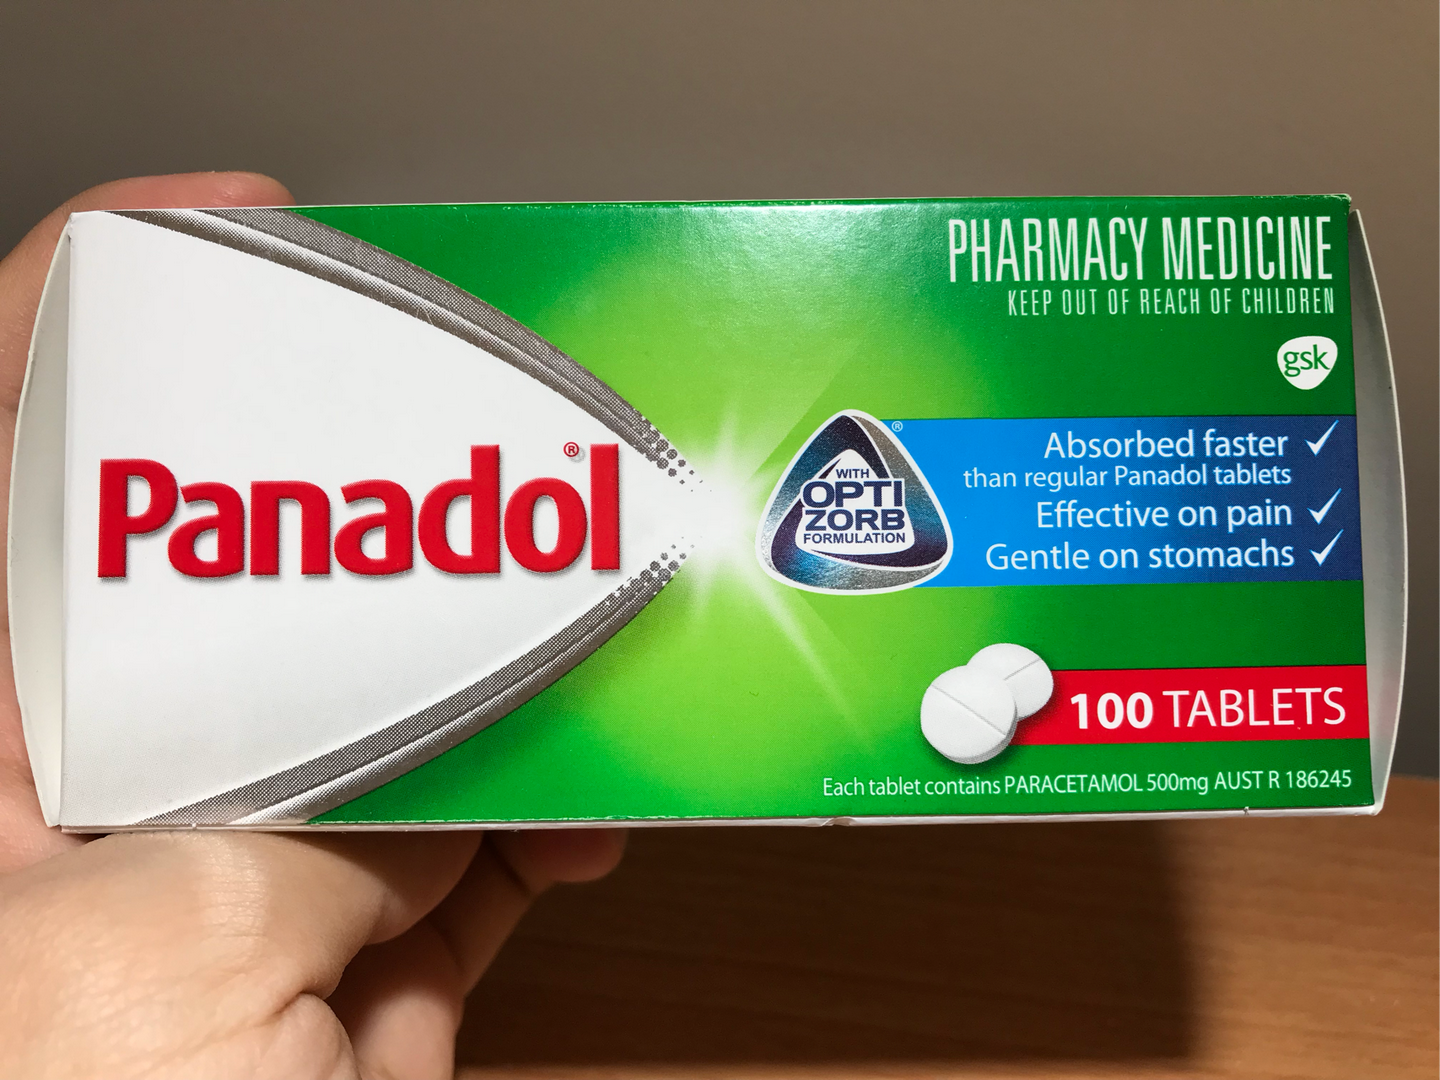 Paracetamol是panadol吗